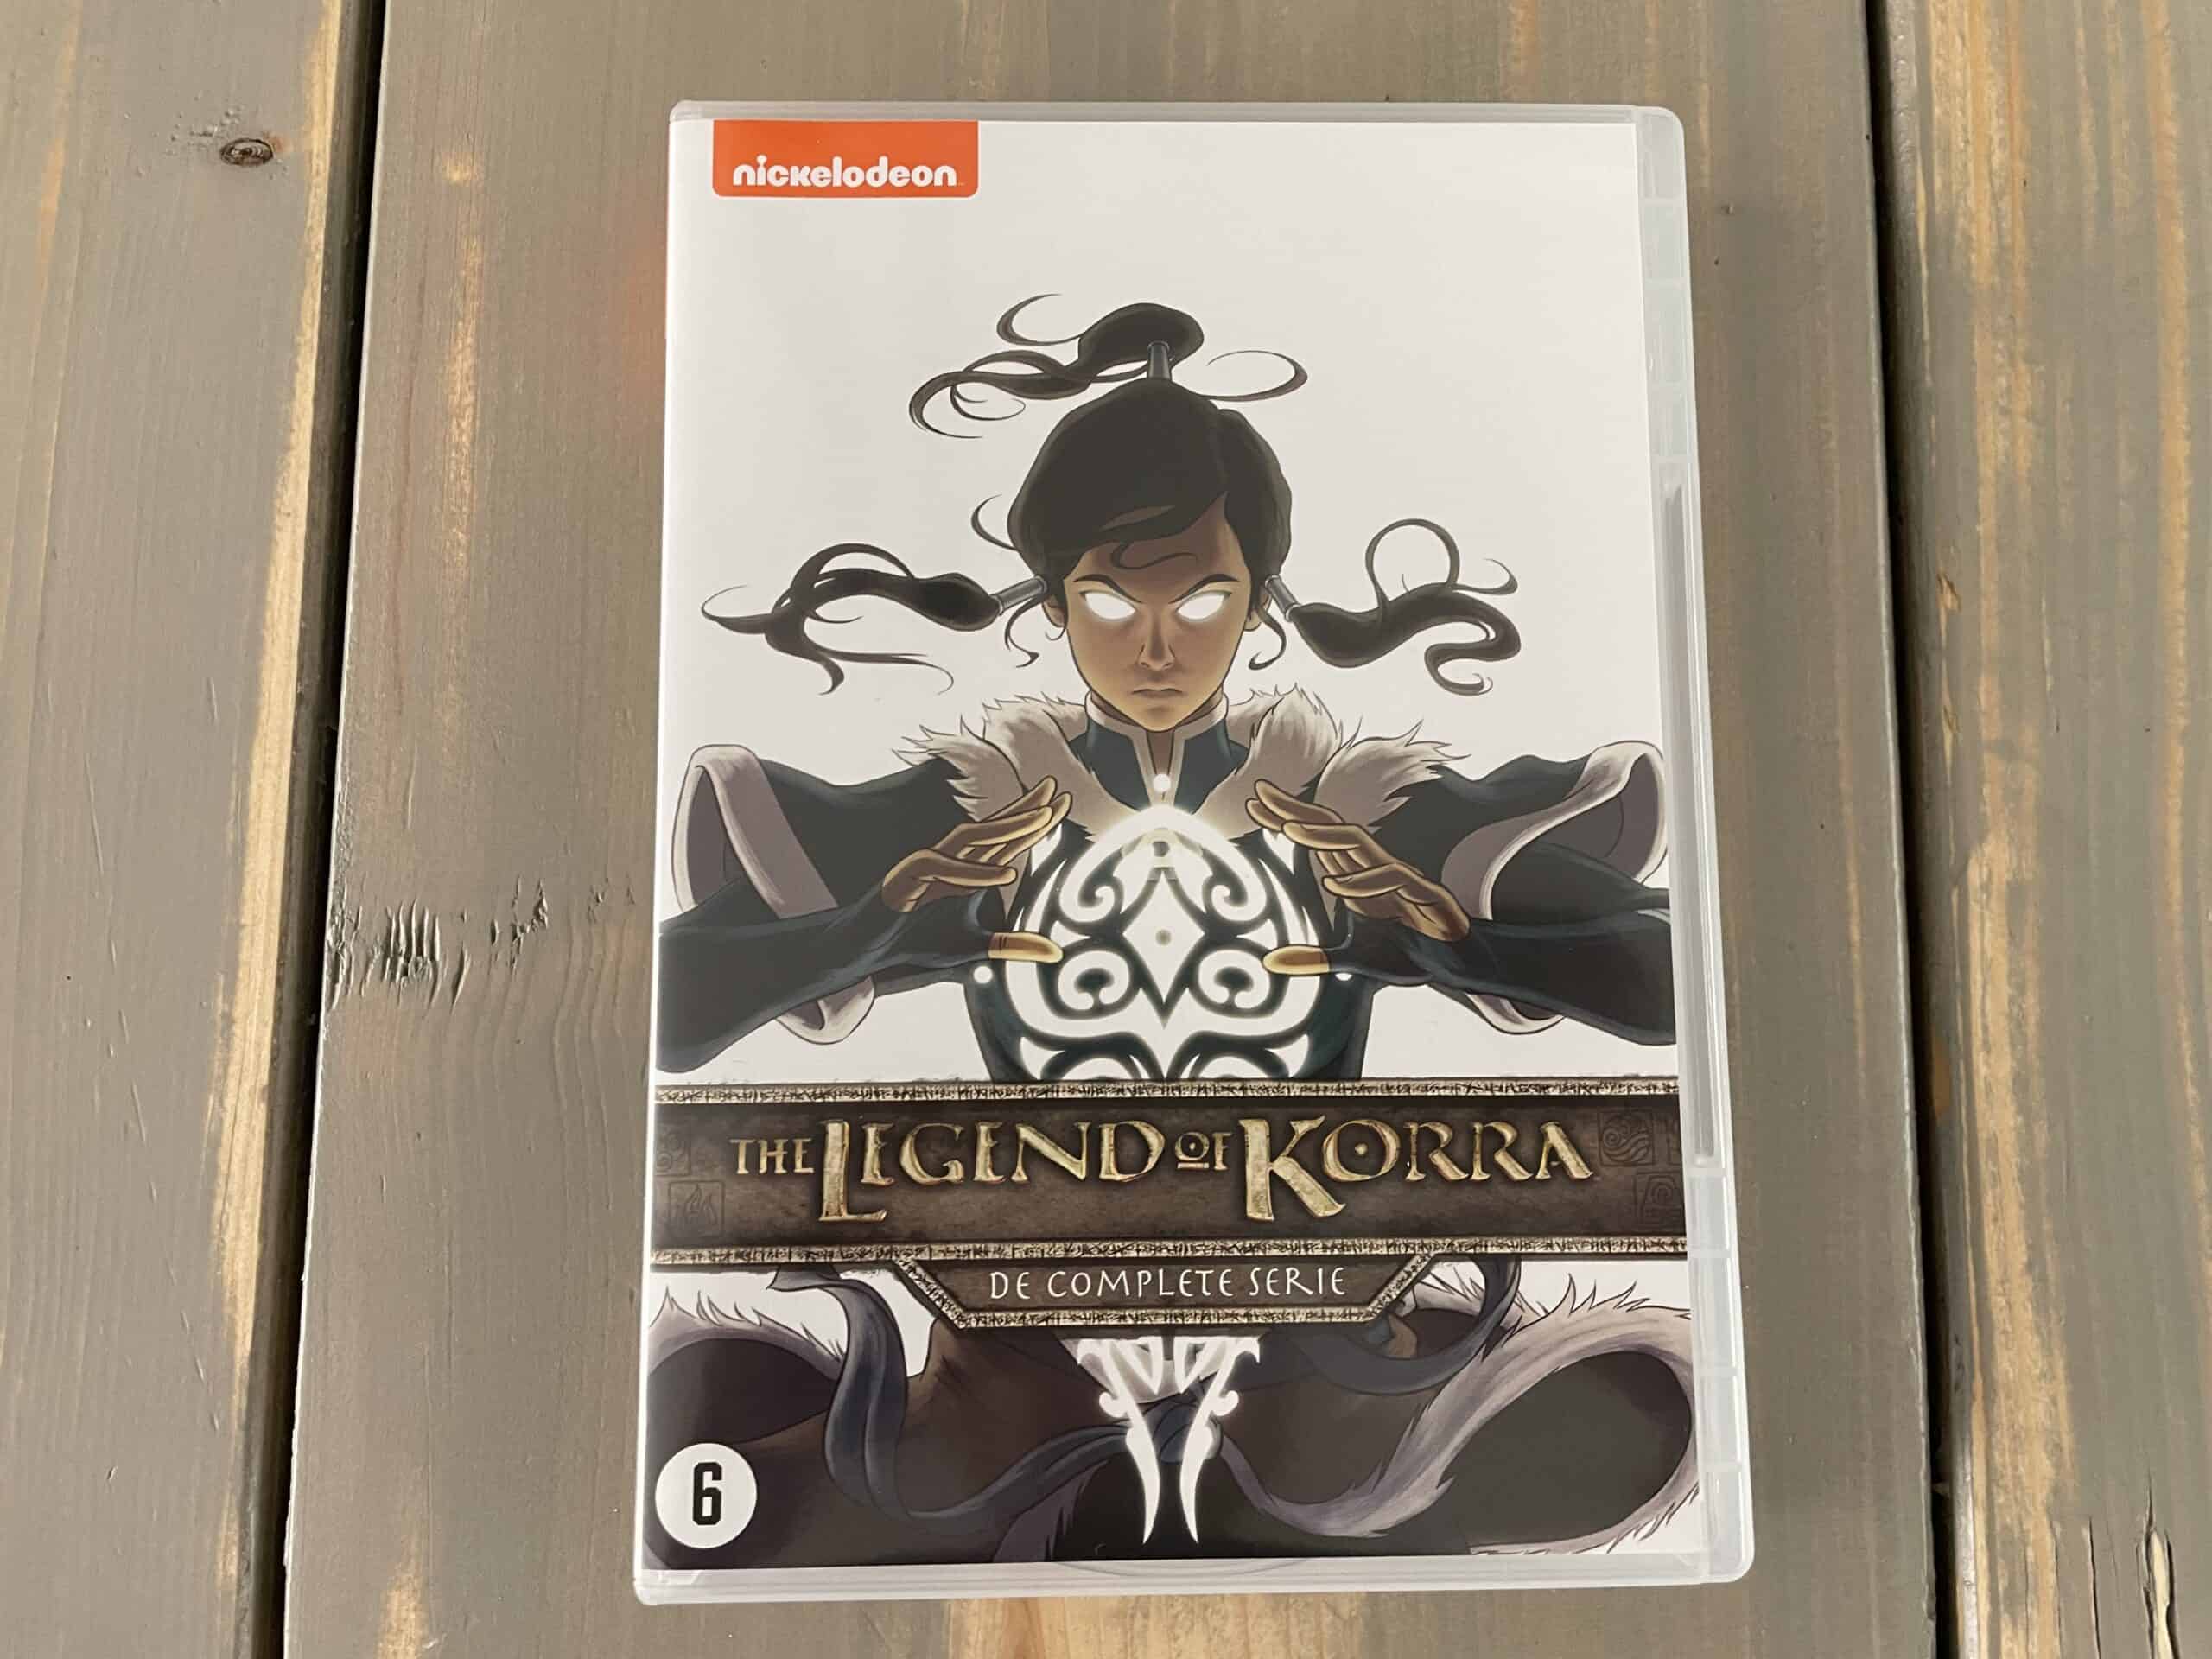 The Legend of Korra: De Complete Serie DVD review